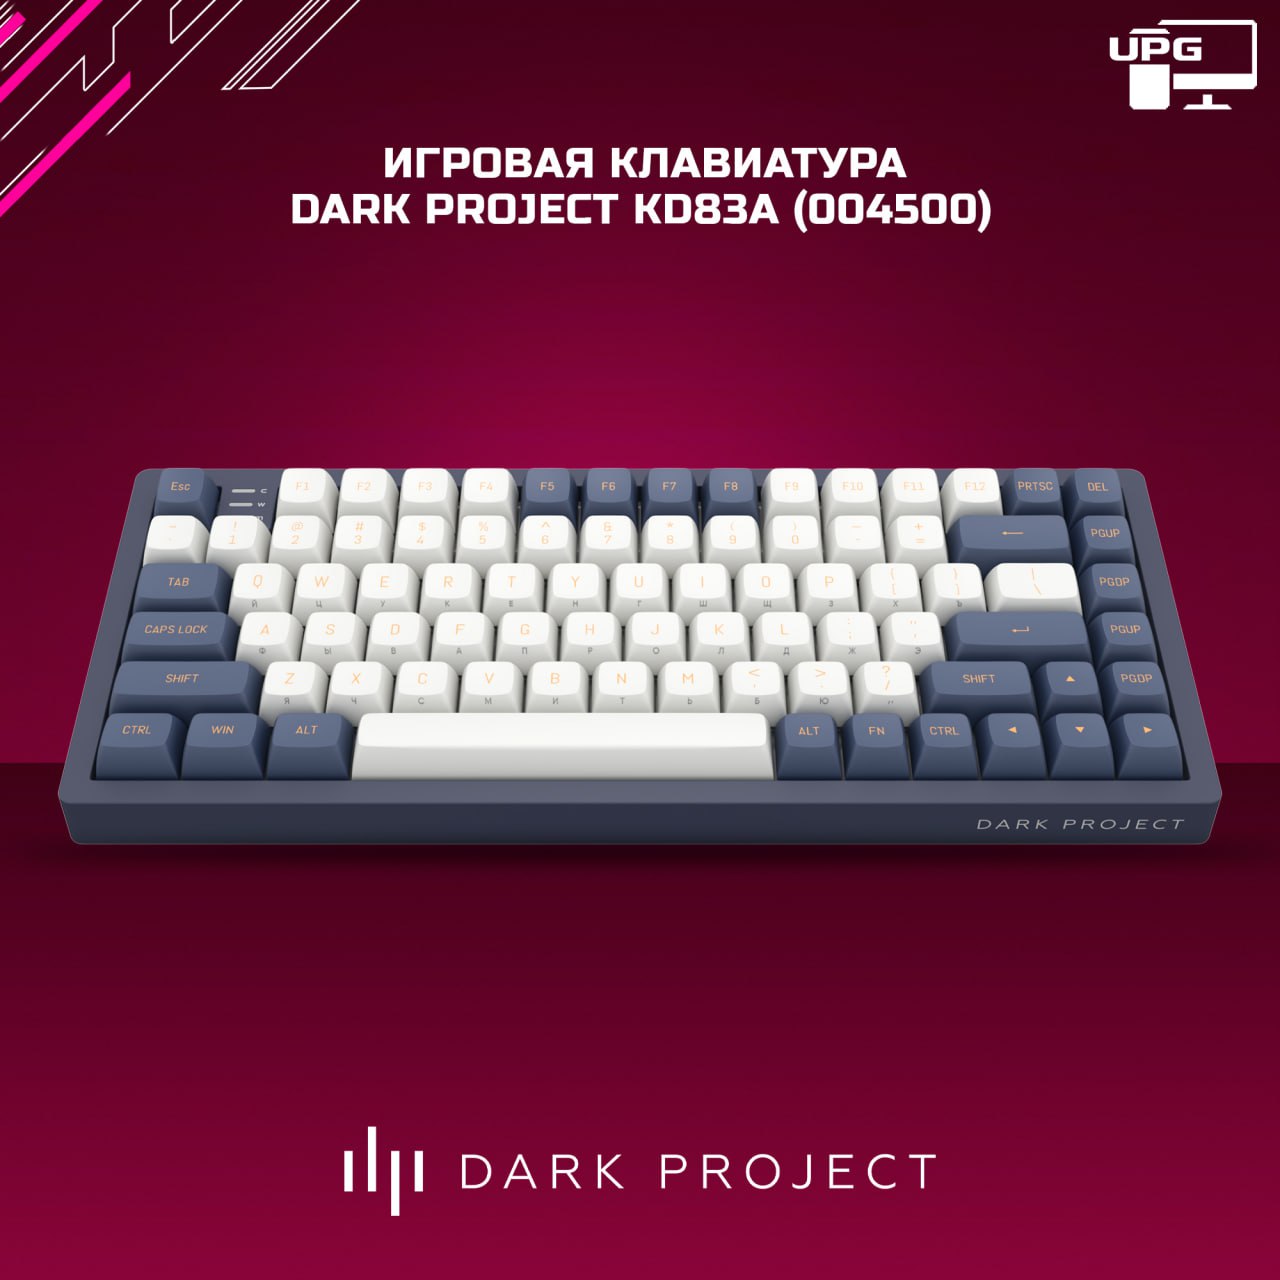 KD 83 A дарк Проджект. Dark Project kd83a. Sapphire переключатели клавиатура. Kd83a.